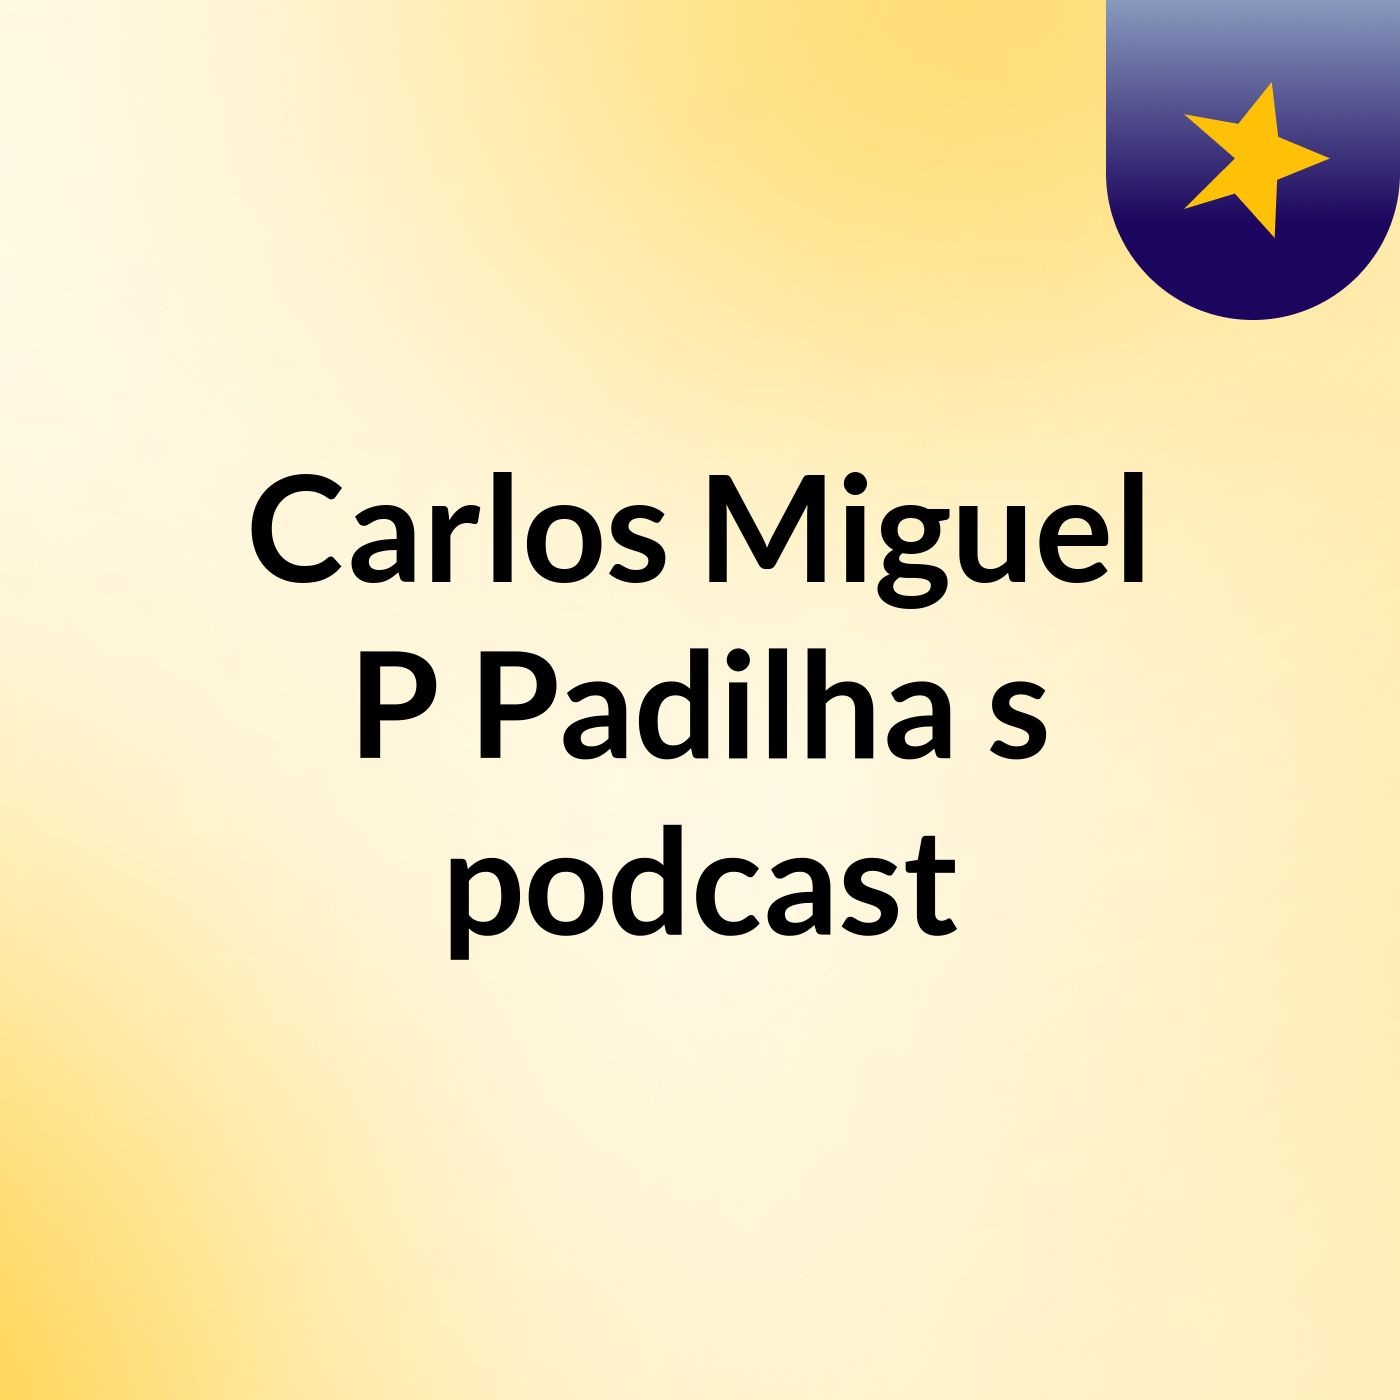 Carlos Miguel P Padilha's podcast